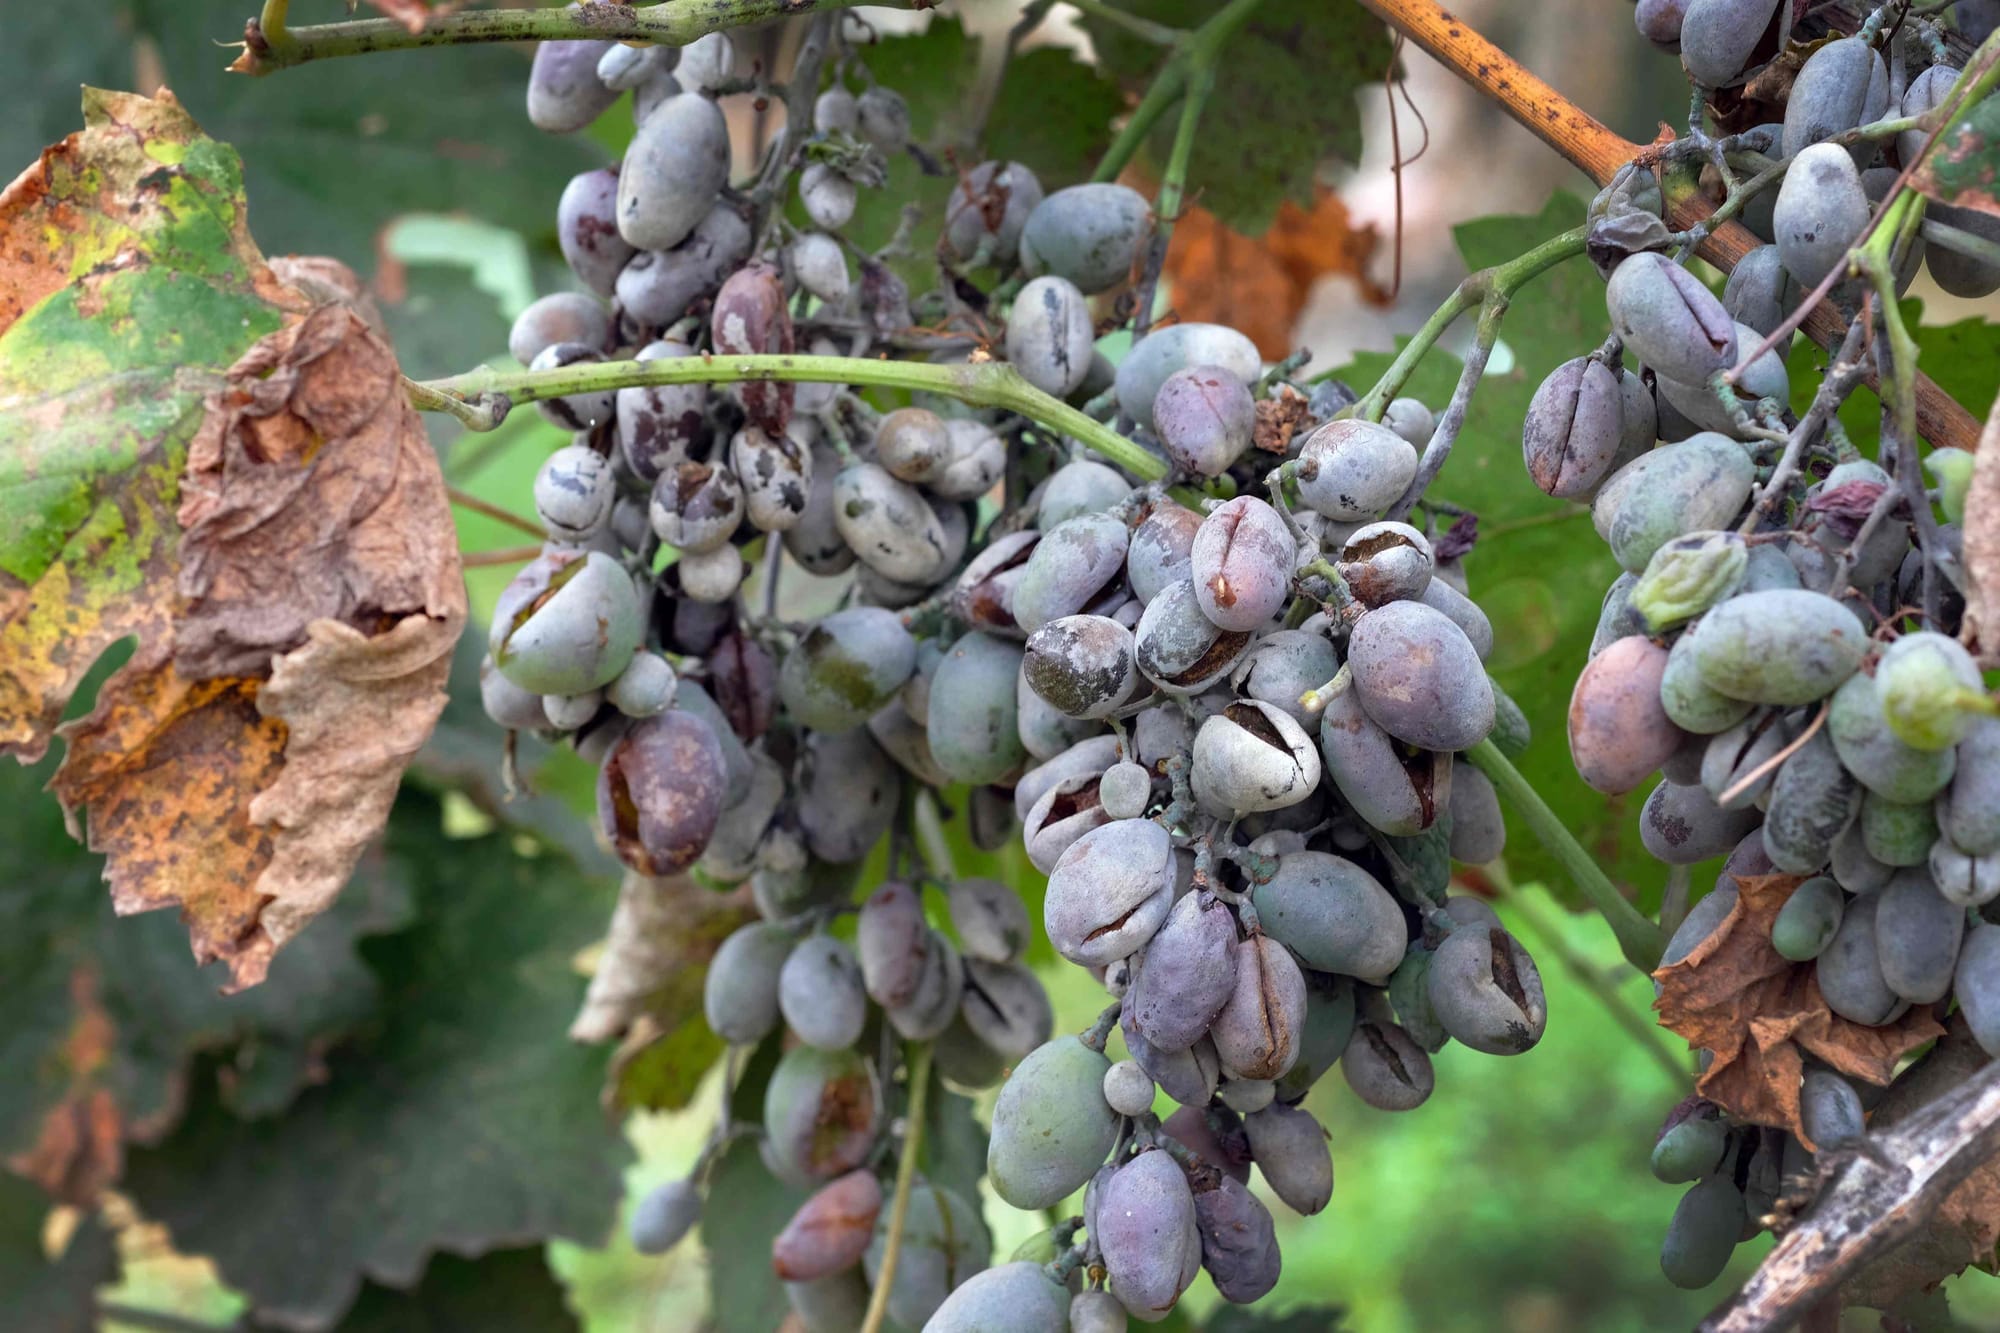 How to combat powdery mildew in vines?